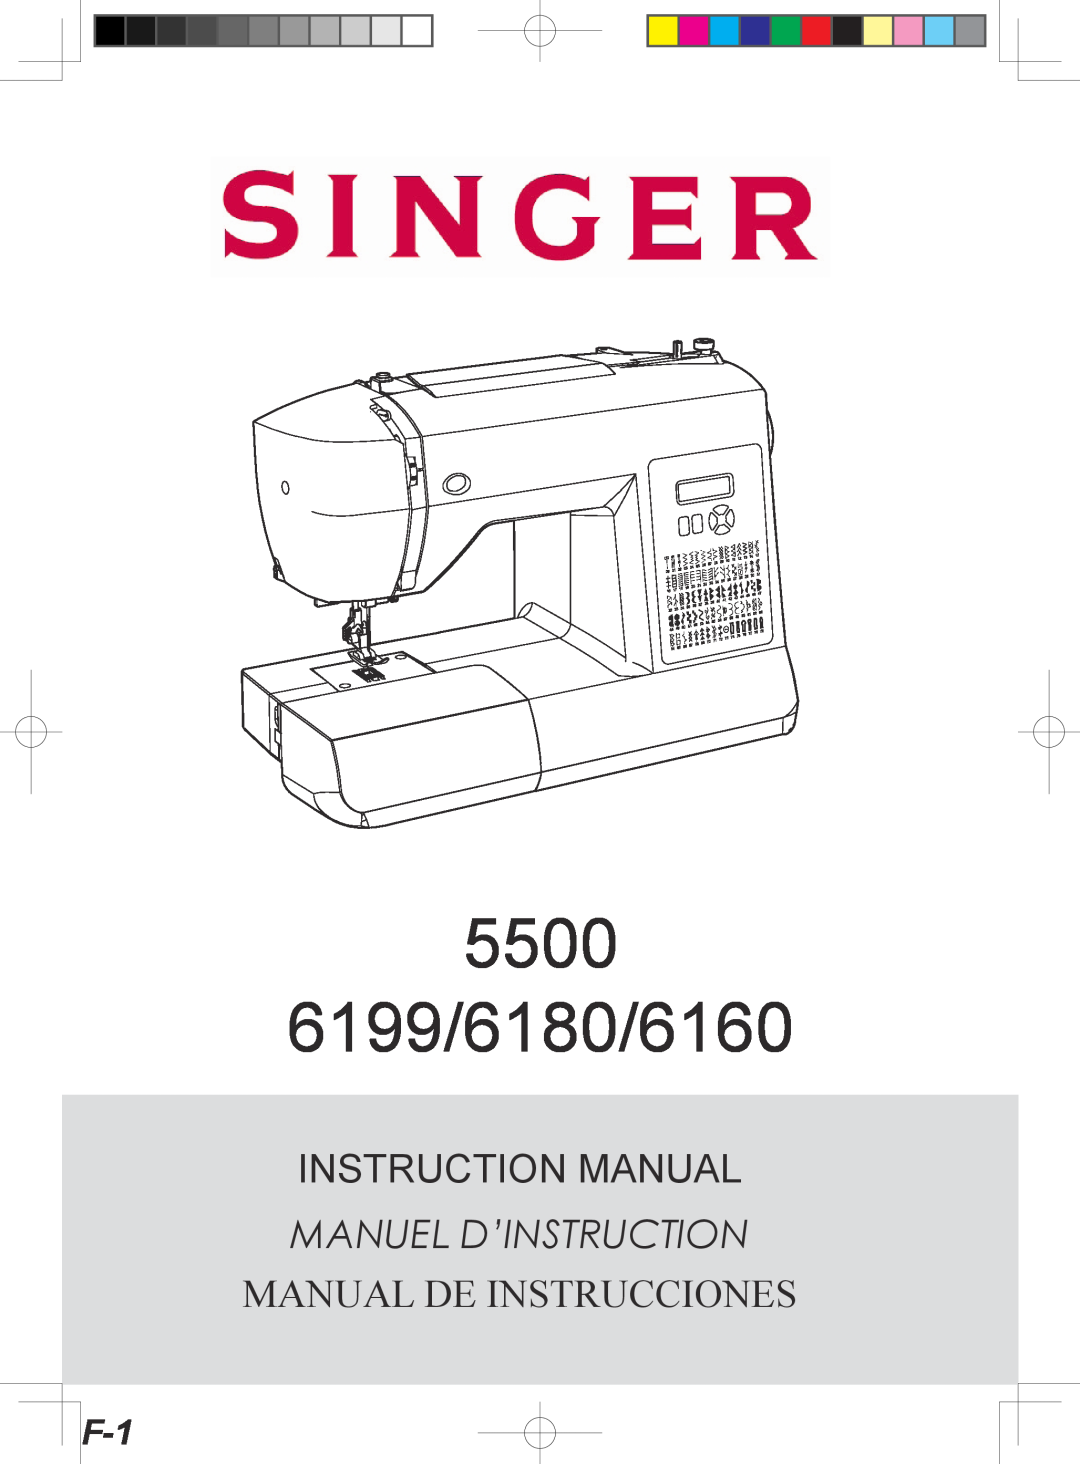 Singer instruction manual 5500/5400 6199/6180/6160, Instruction Manual, Manuel D’Instruction, Manual De Instrucciones 